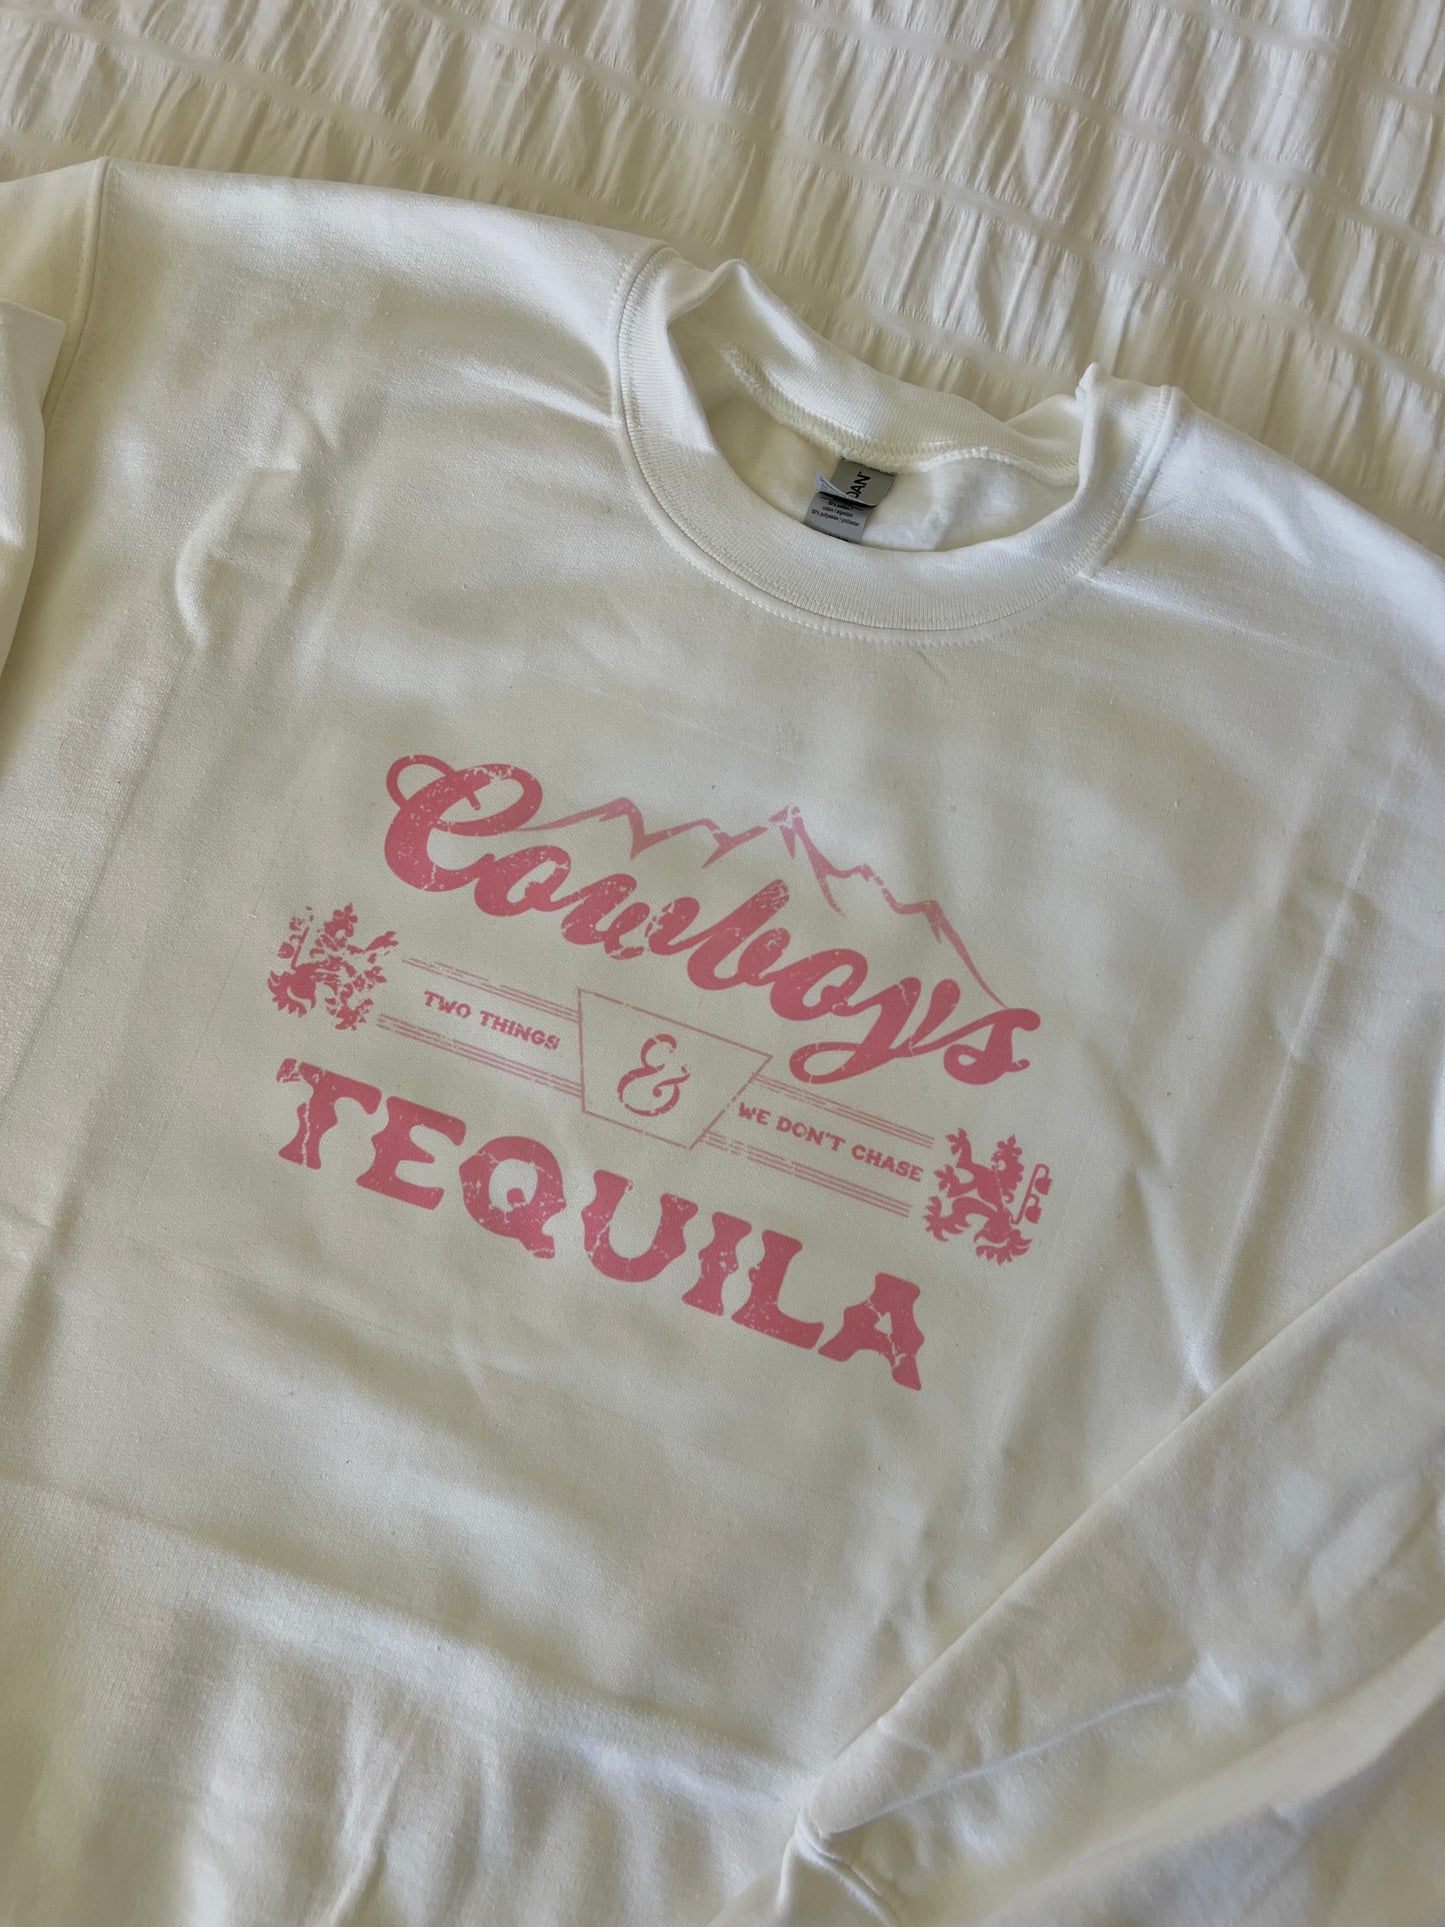 cowboys & tequila sweatshirt